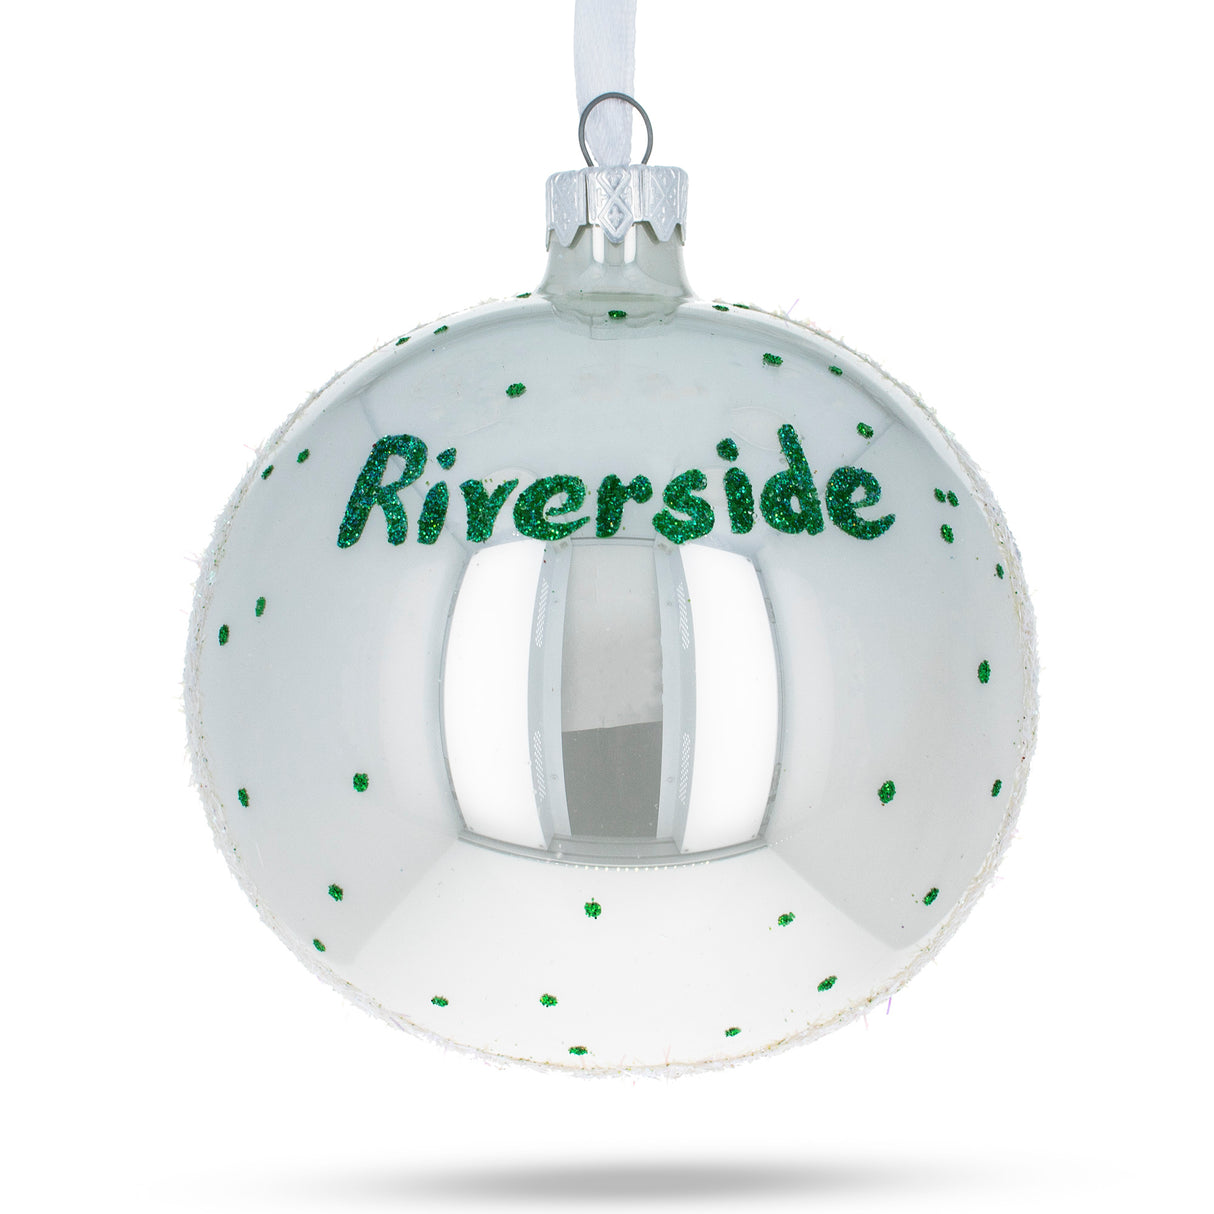 Buy Christmas Ornaments > Travel > North America > USA > California > Riverside by BestPysanky Online Gift Ship